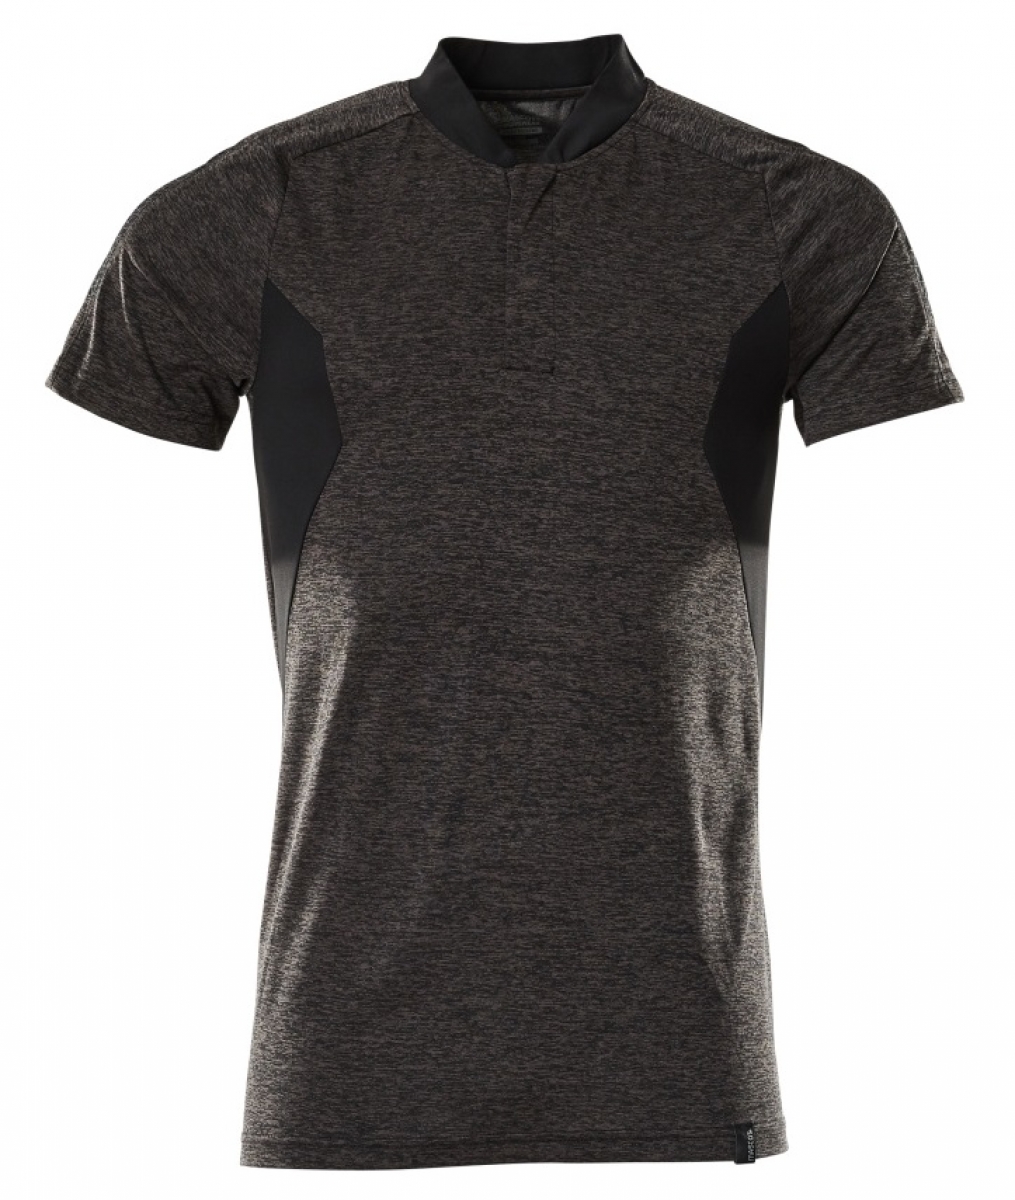 MASCOT-Worker-Shirts, Polo-Shirt, 150 g/m, dunkelanthrazit/schwarz